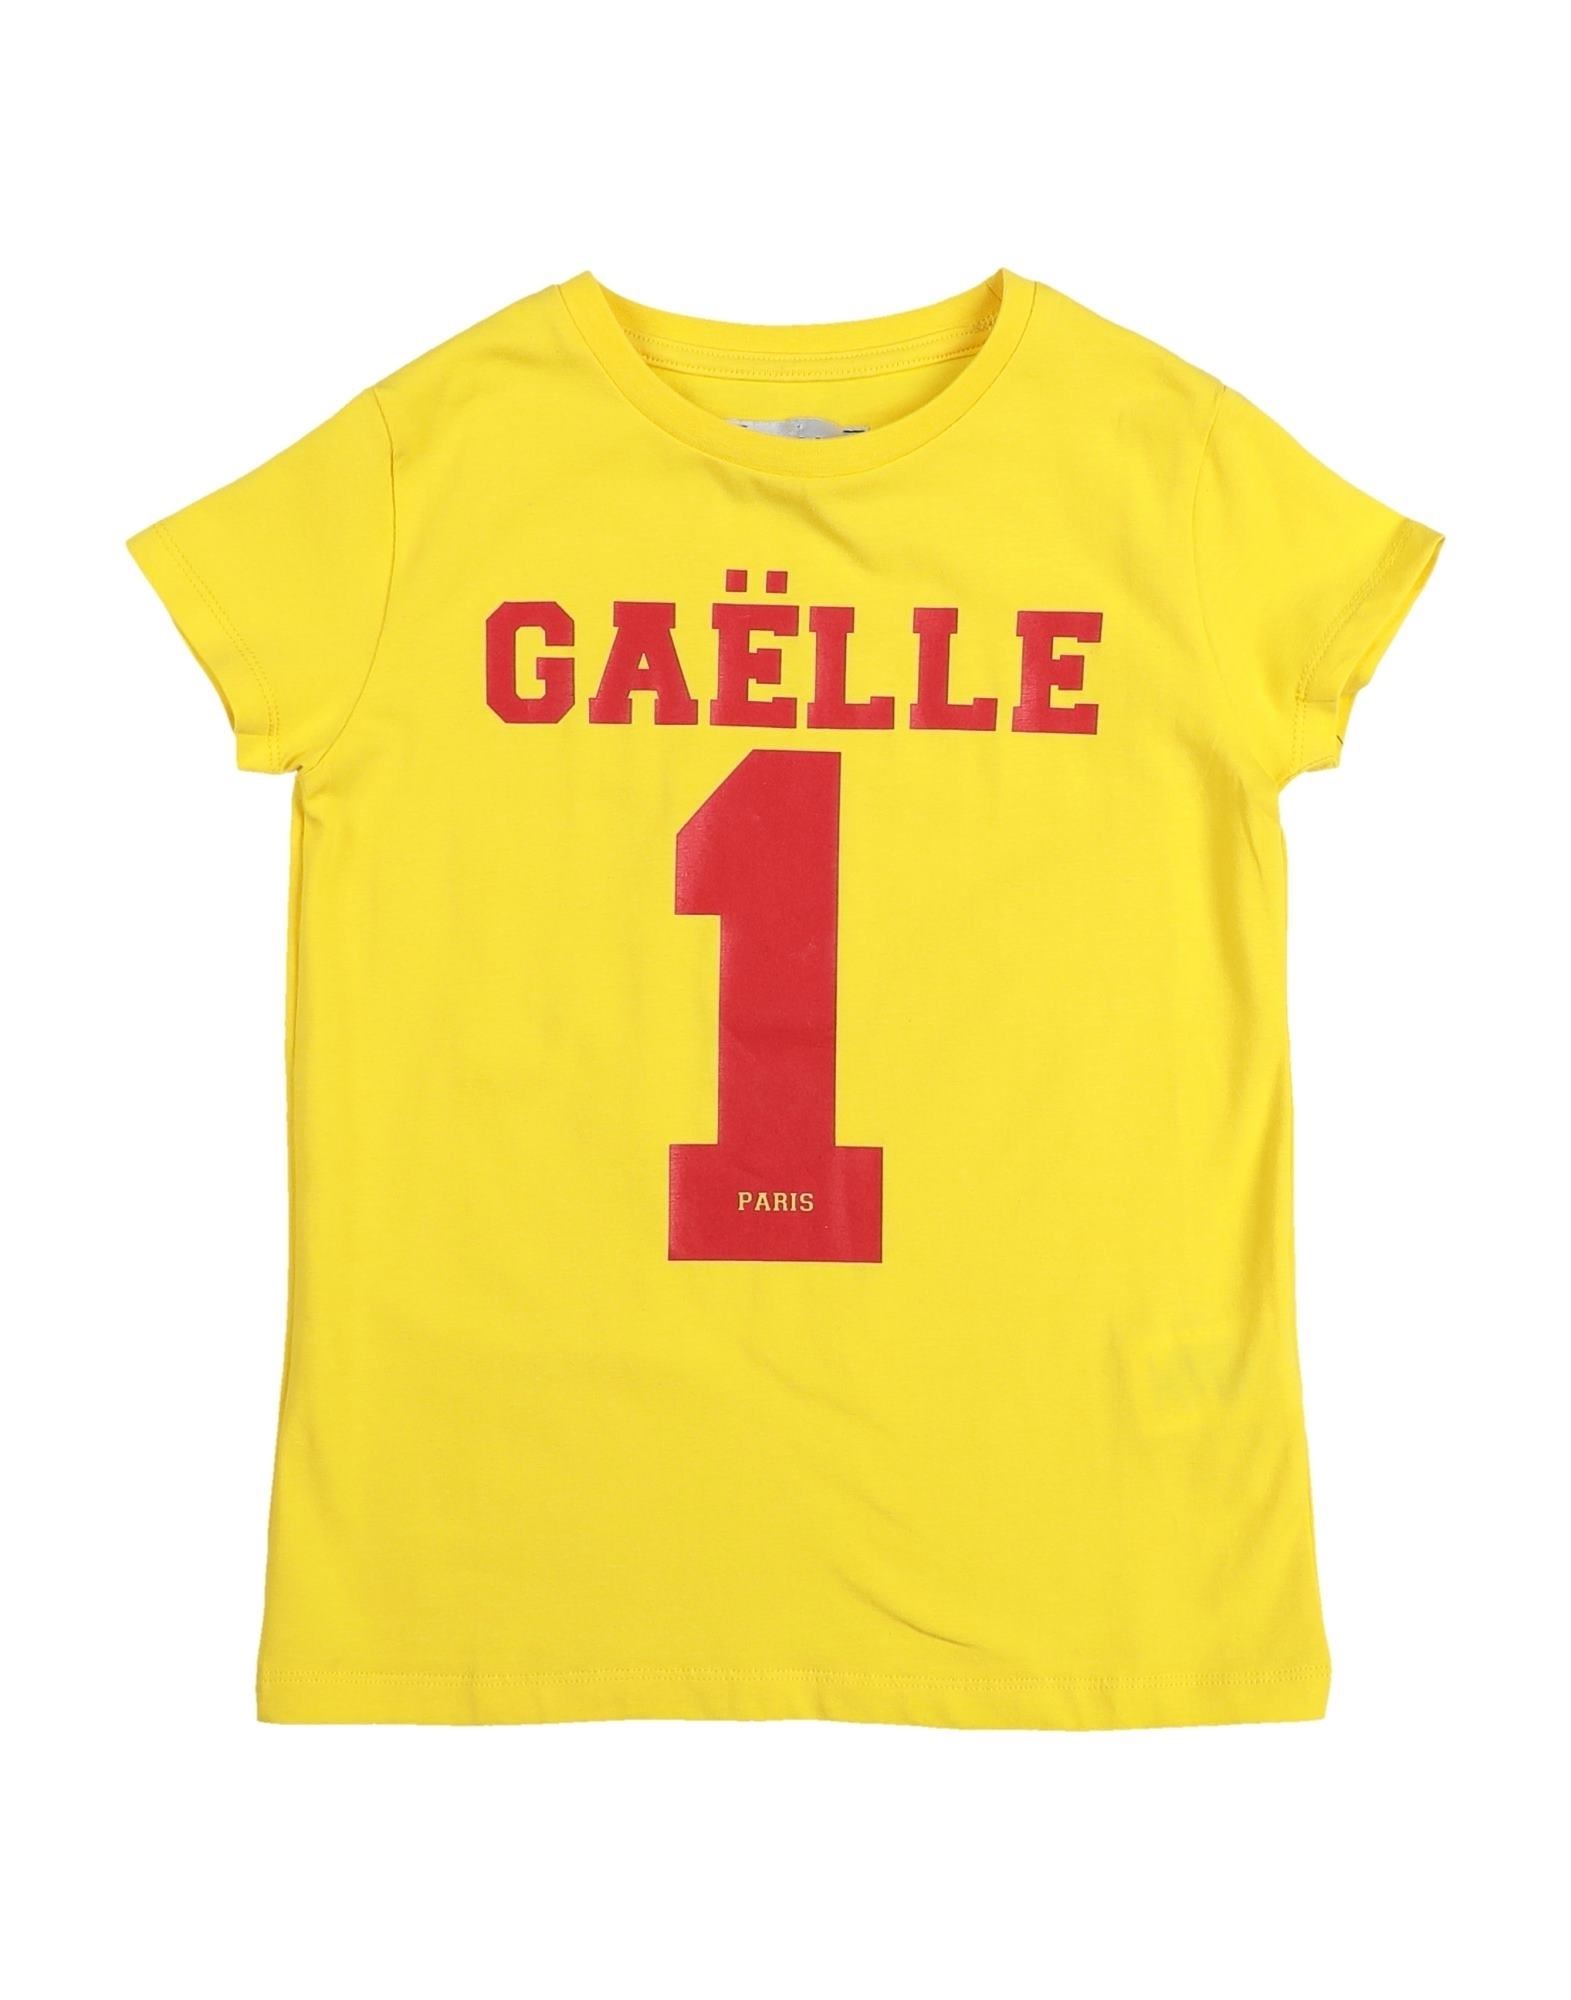 Gaelle Paris Kids' T-shirts In Yellow